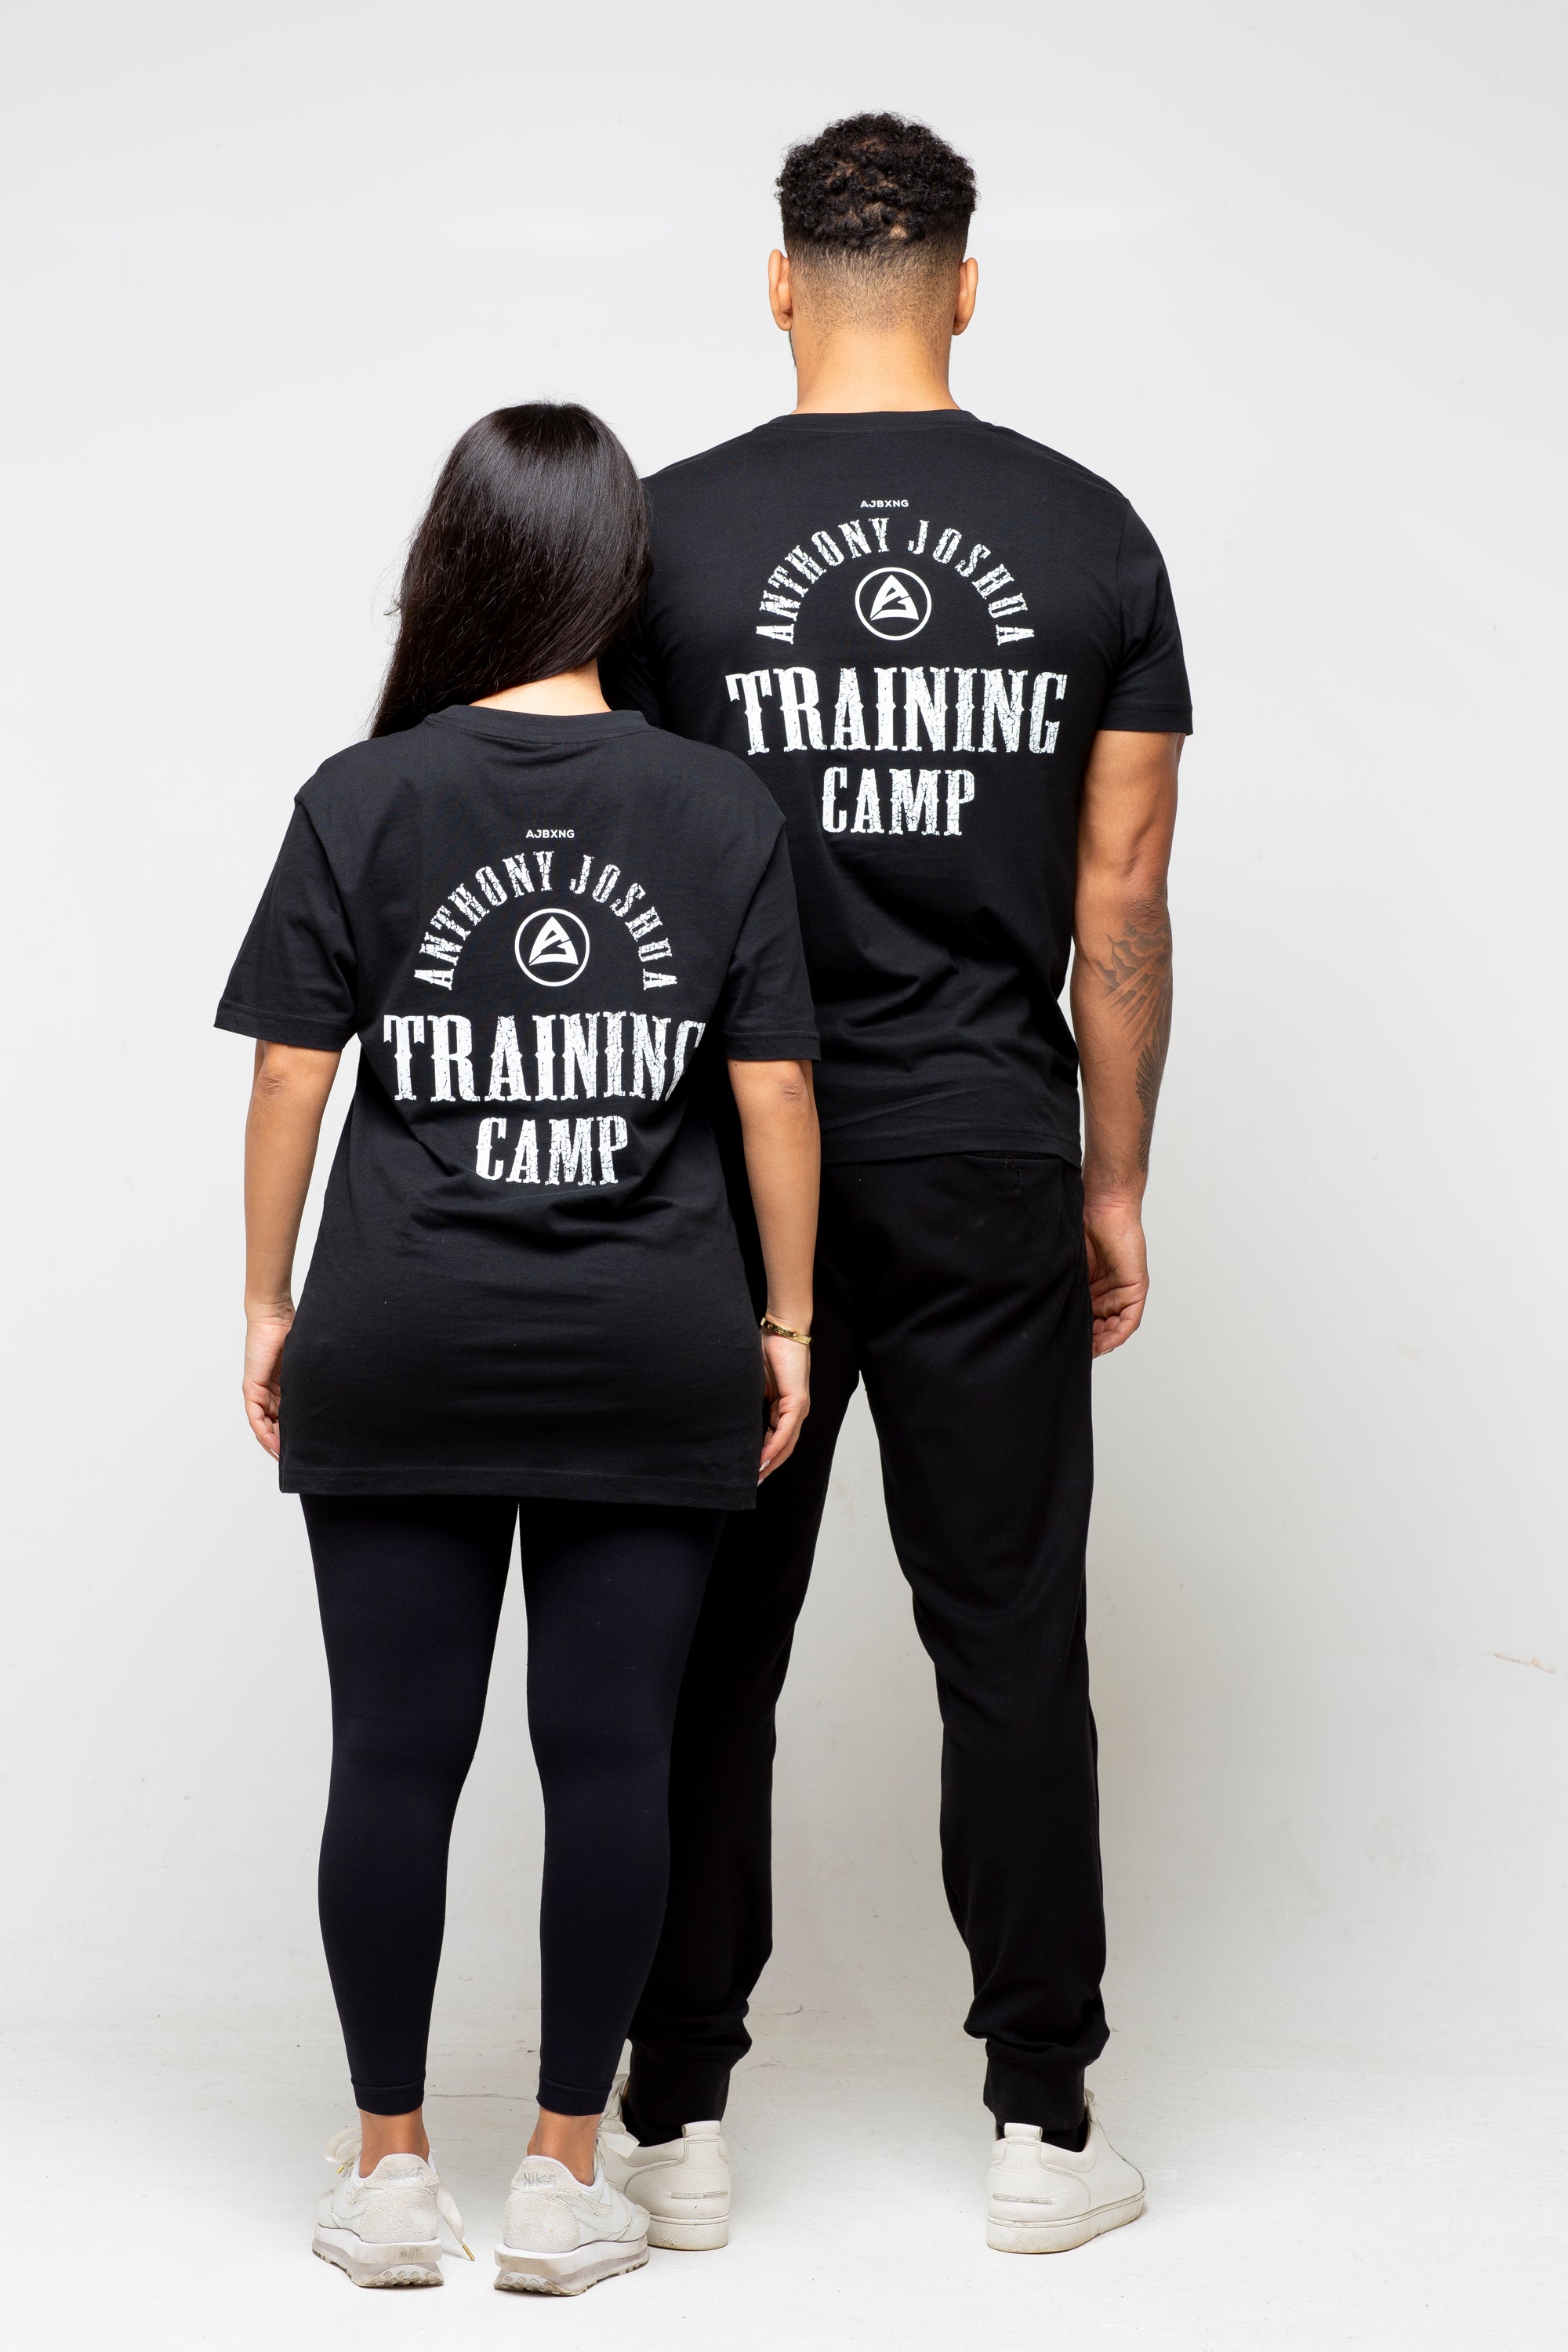 AJBXNG Training Camp Black Tee